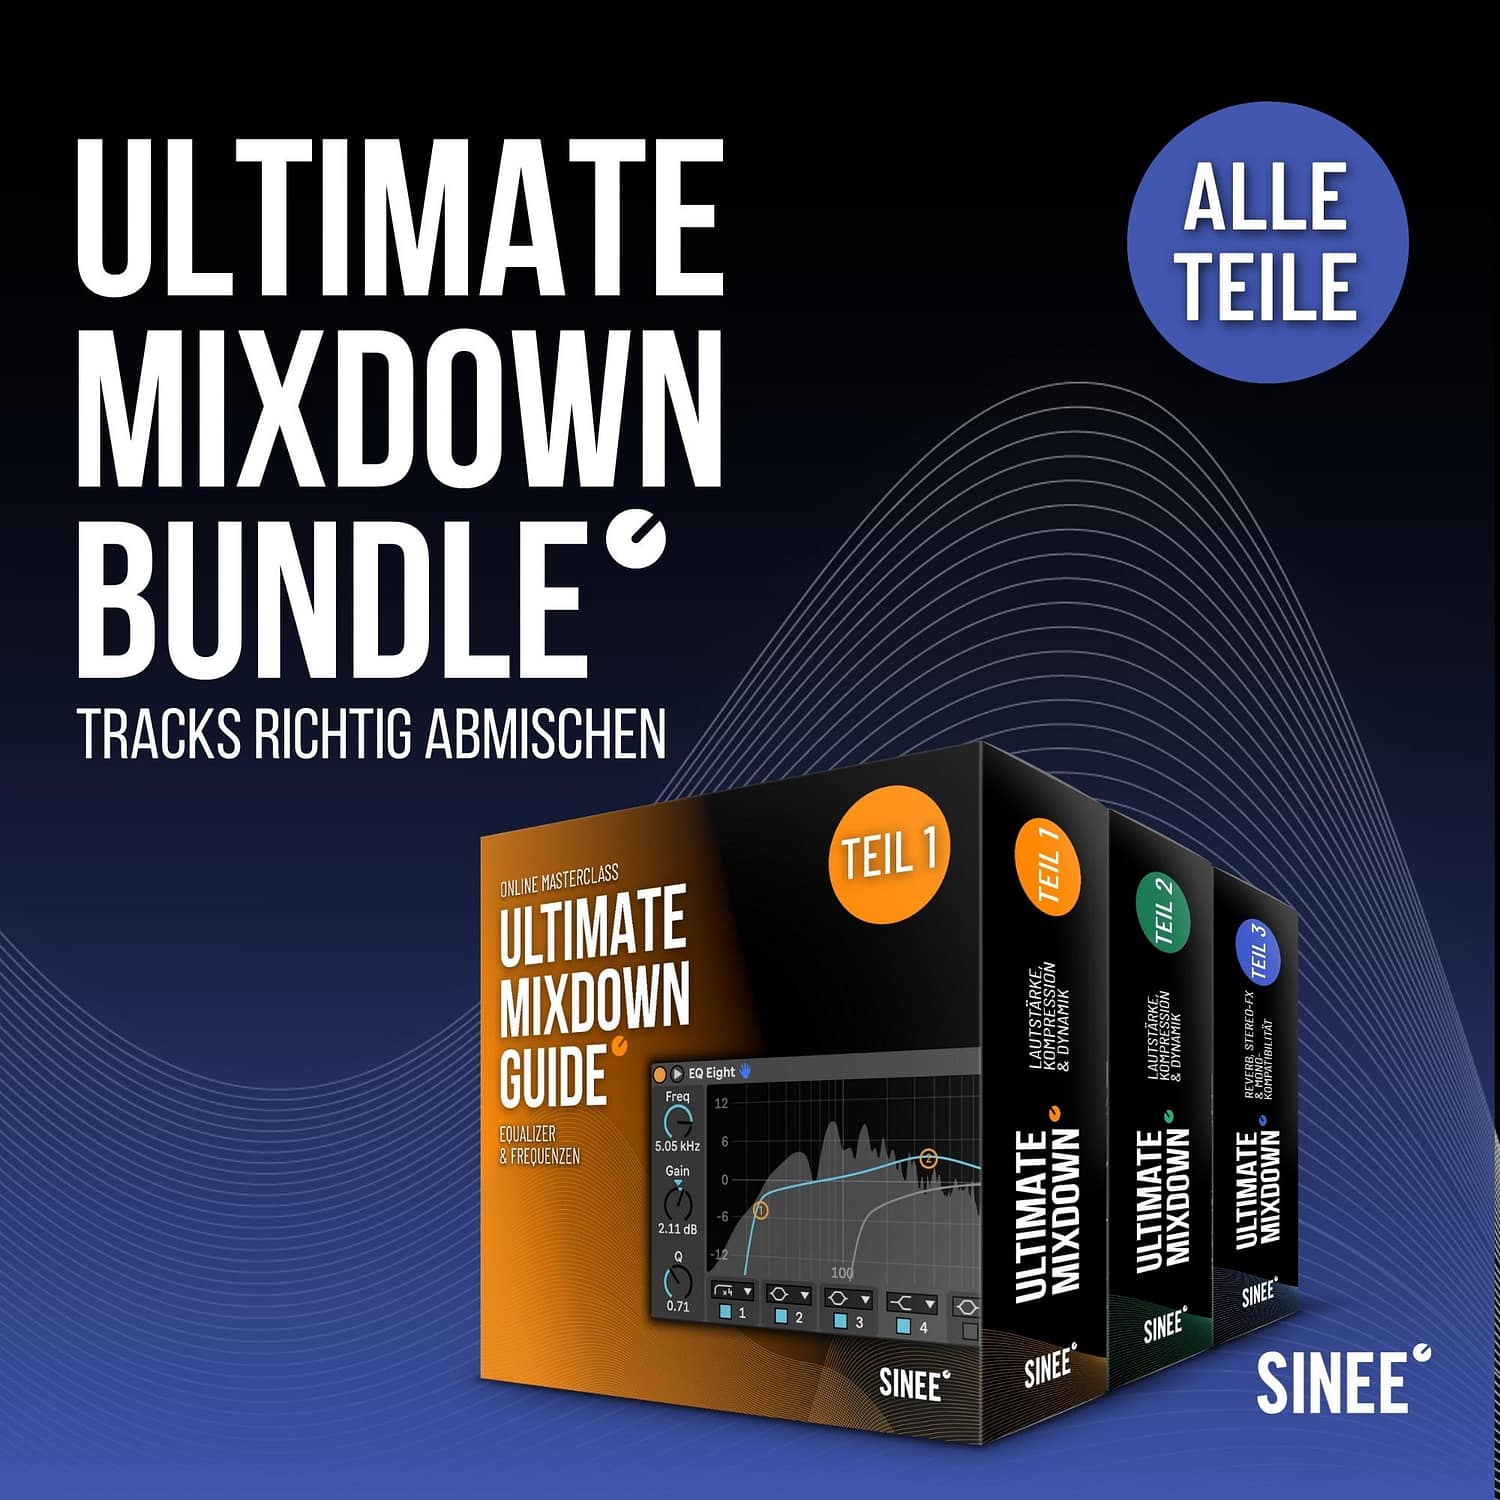 Ultimate Mixdown Bundle Cover (1000 × 1000 px)